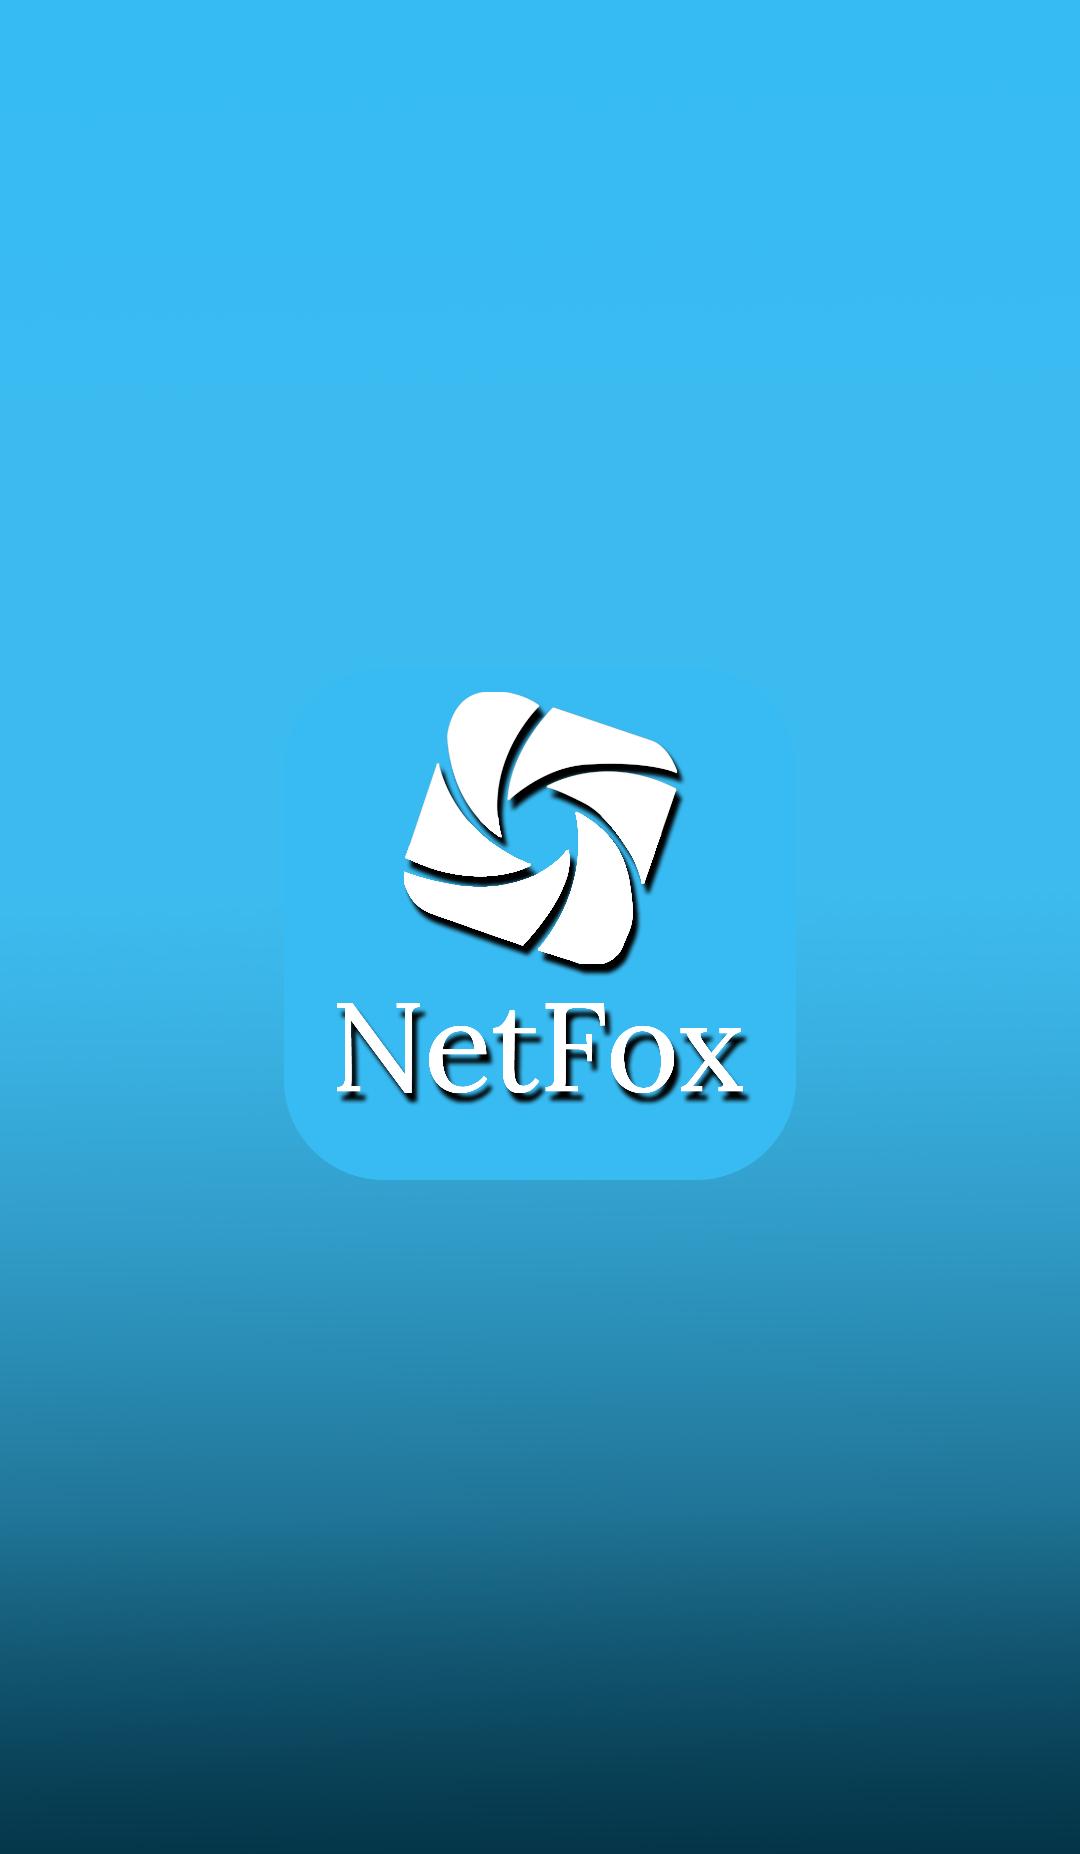 Netfox. Fox net ВК. Netfox logo.